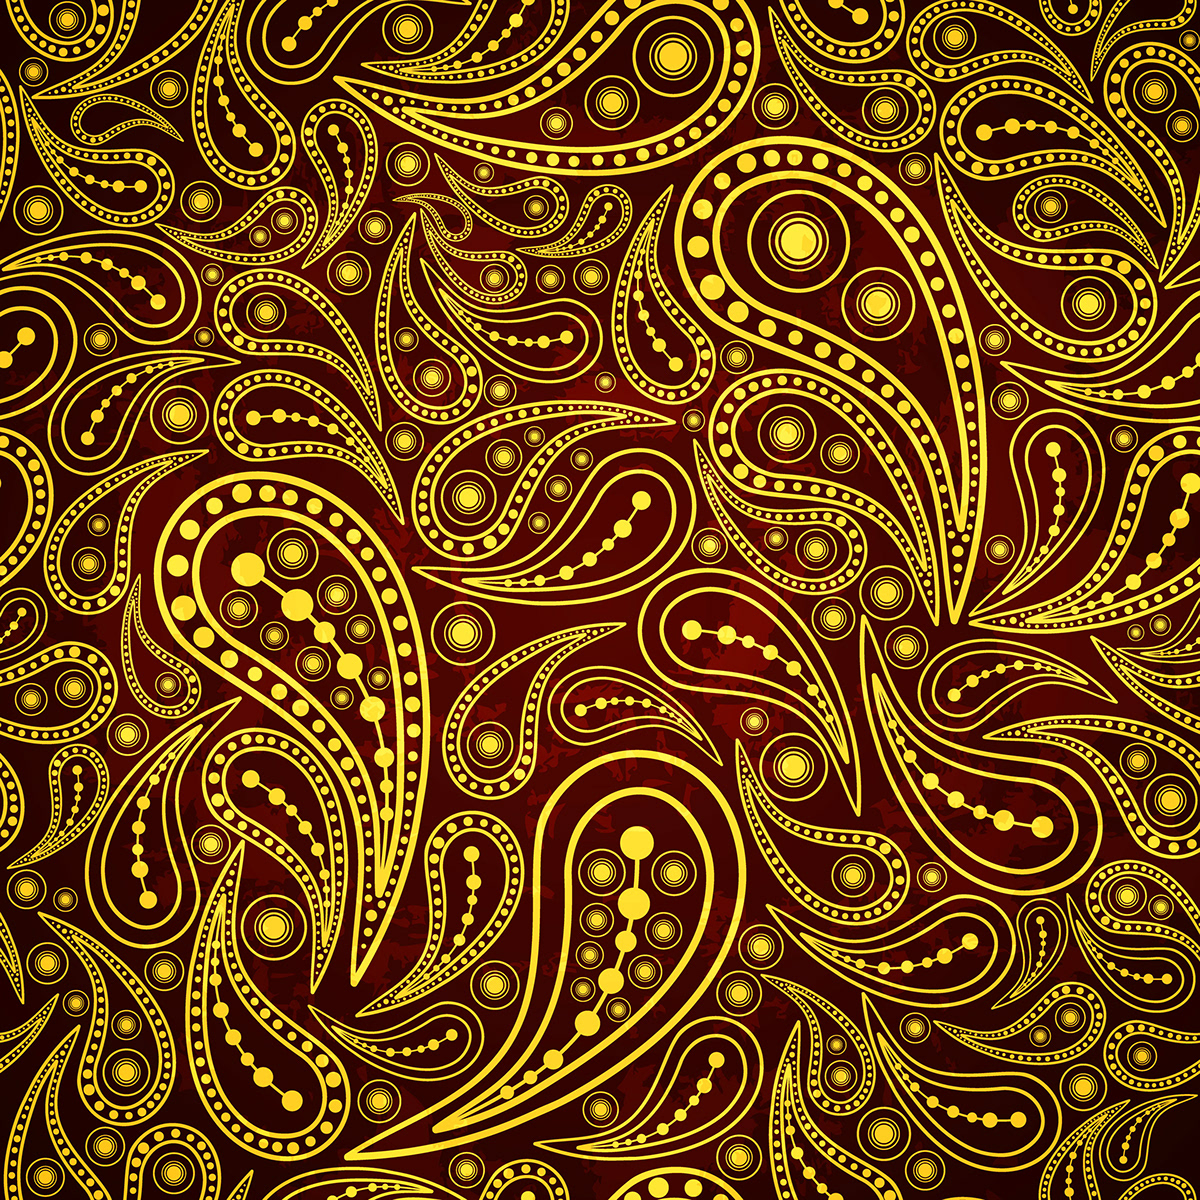 abstract art pattern vecor Shutterstock paisley gold silver India persia design Web Retro leaf